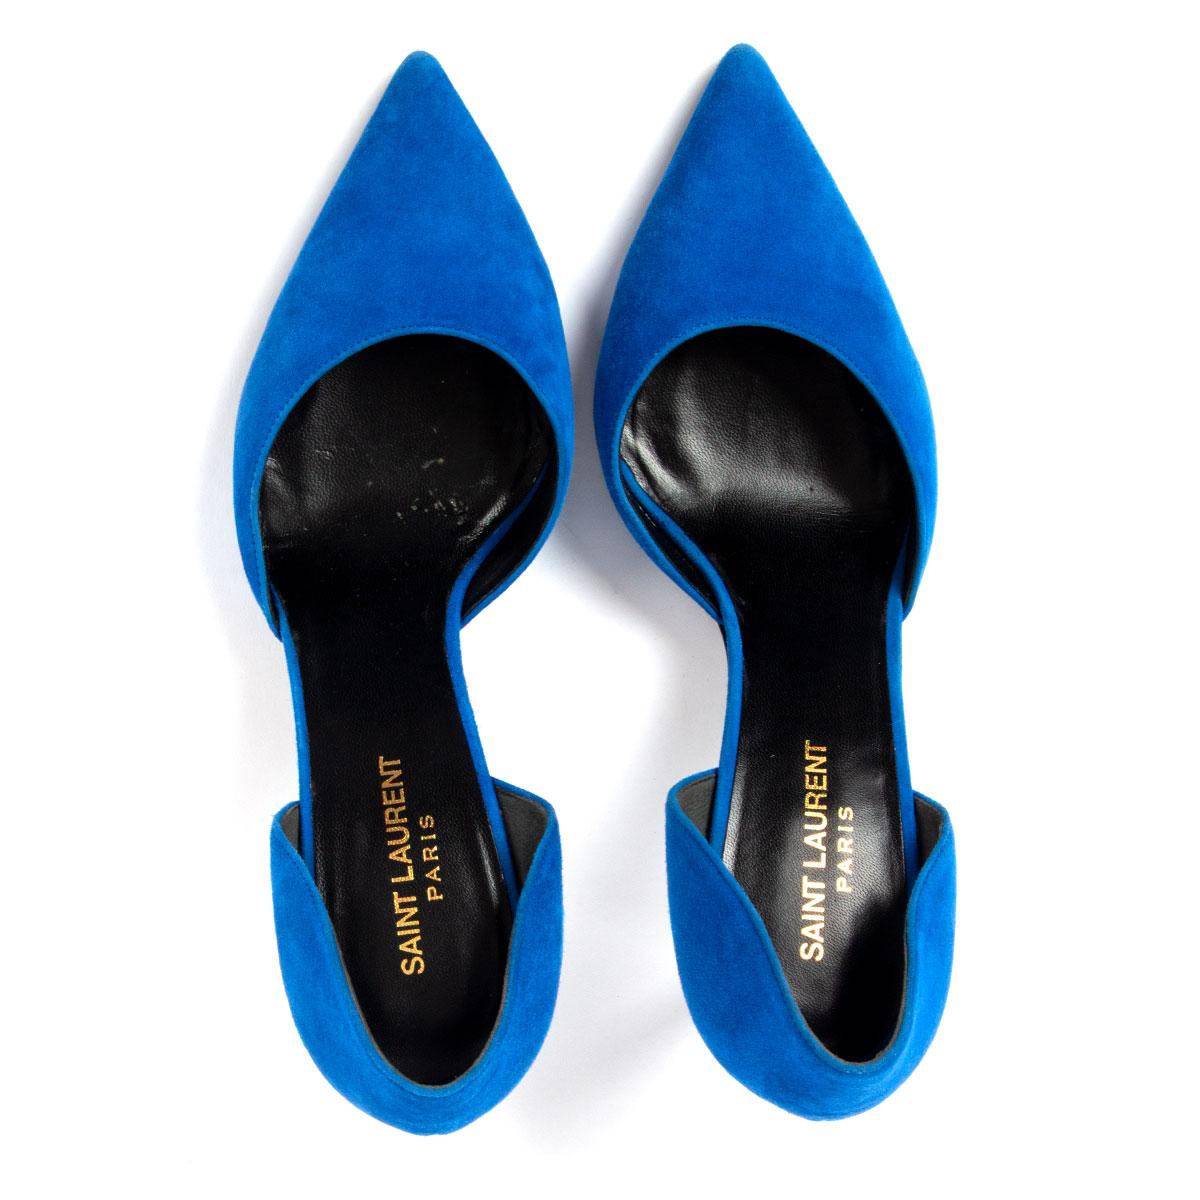 blue suede shoes for sale